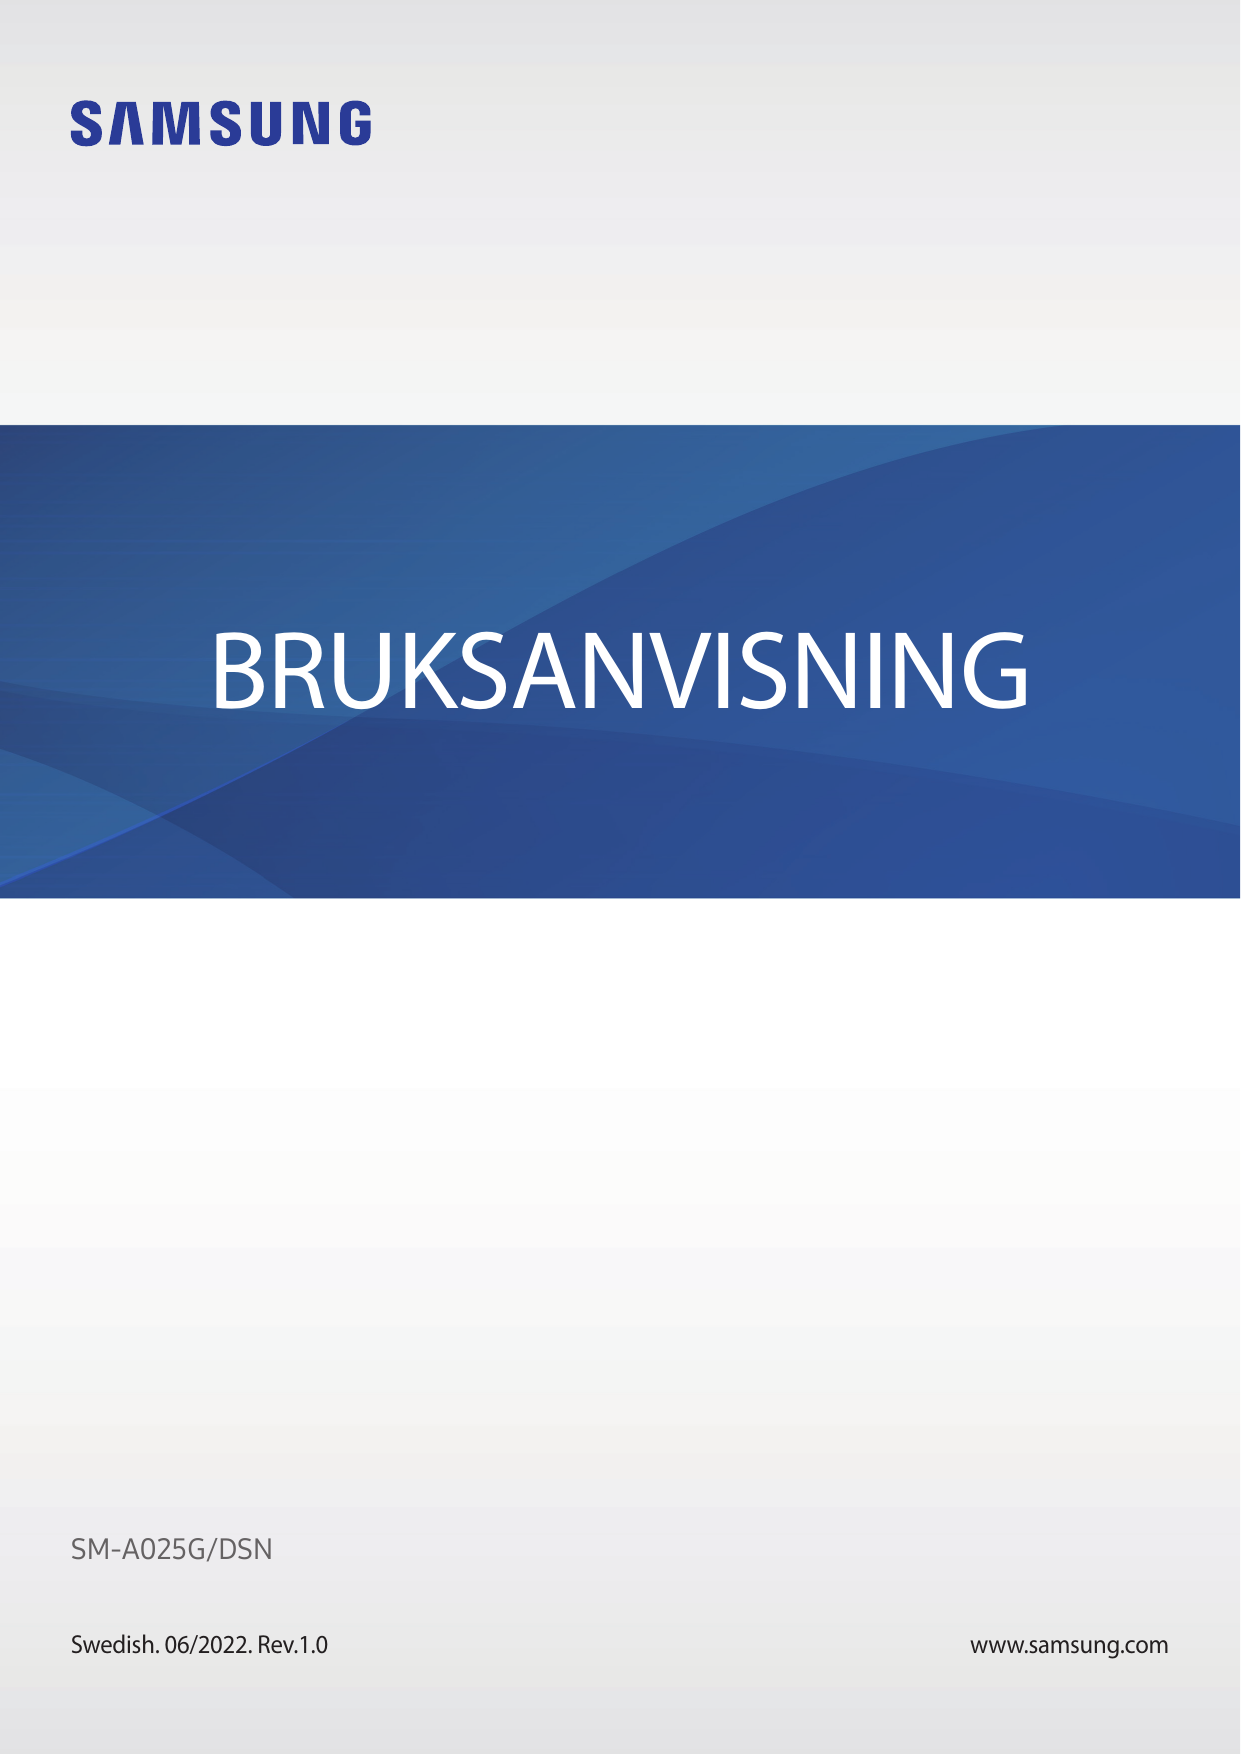 BRUKSANVISNINGSM-A025G/DSNSwedish. 06/2022. Rev.1.0www.samsung.com